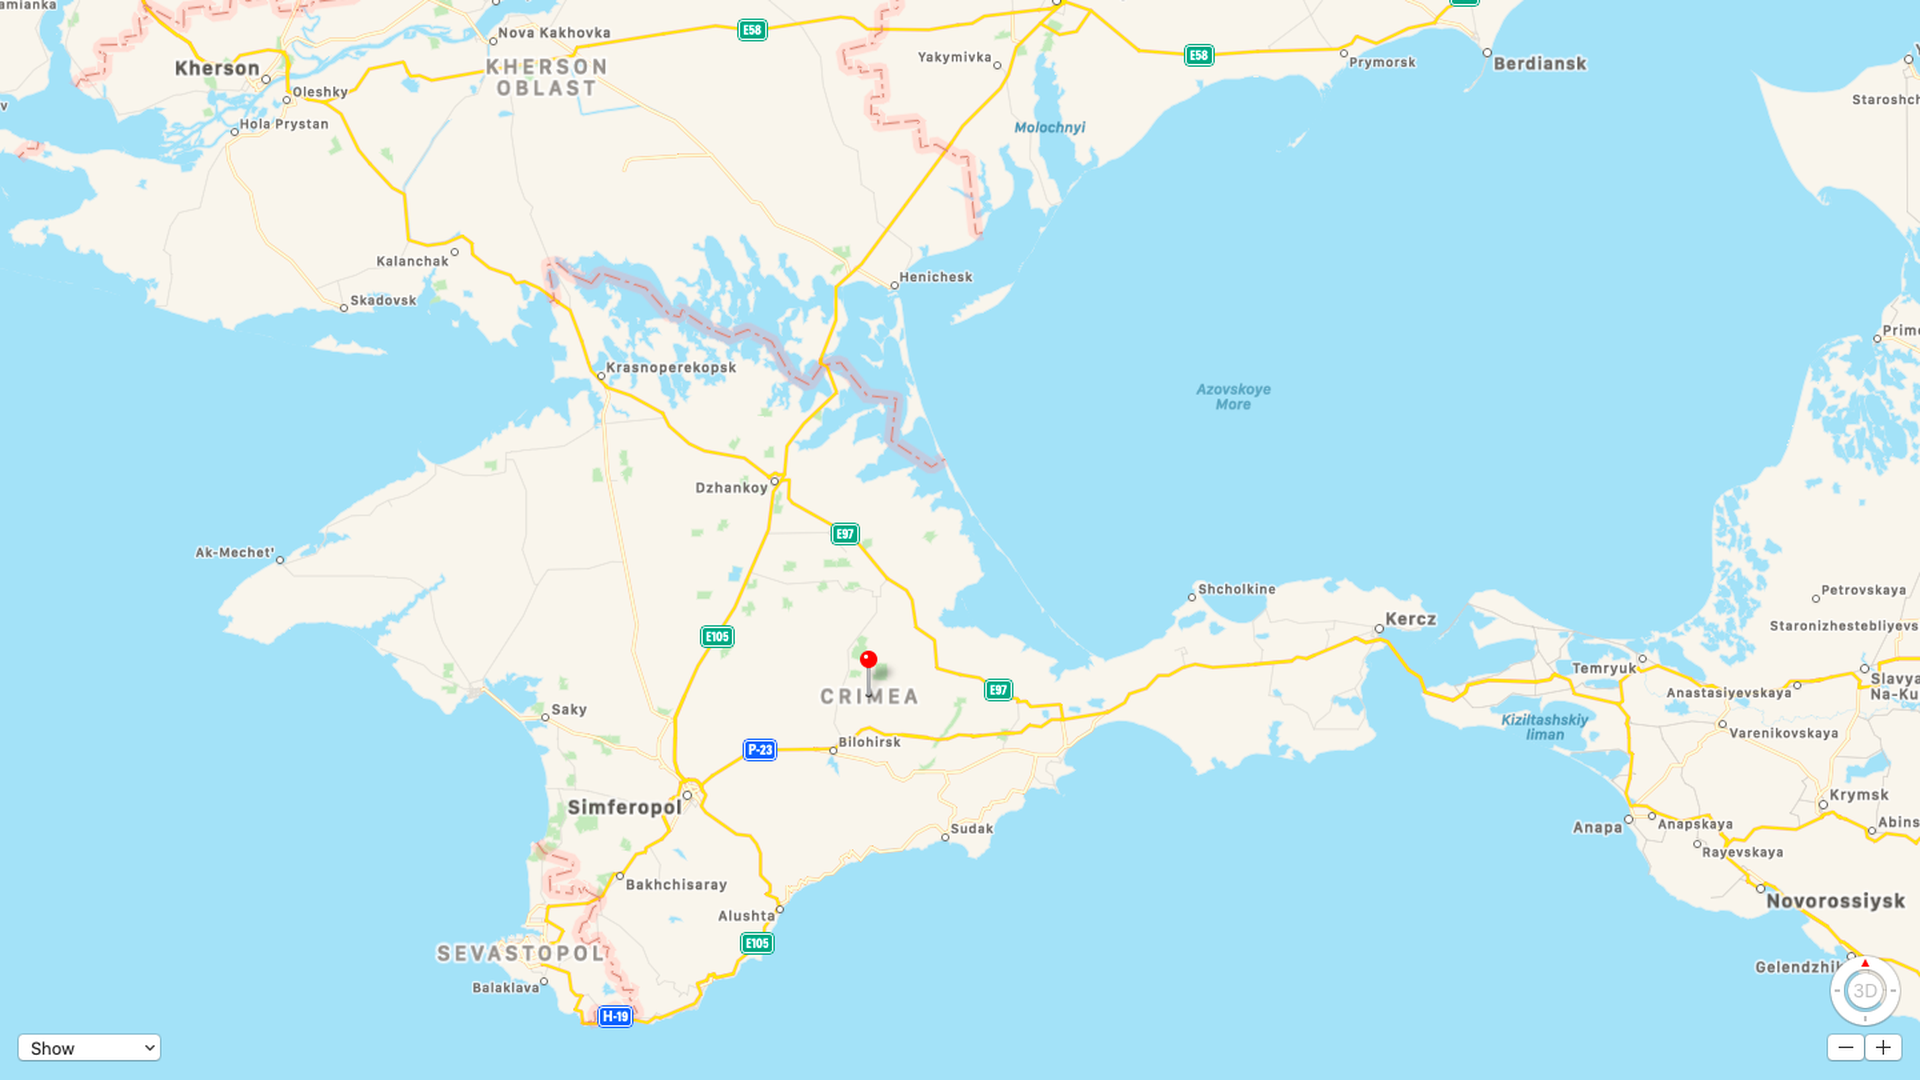 Crimea viewed on Apple maps outside of Russia